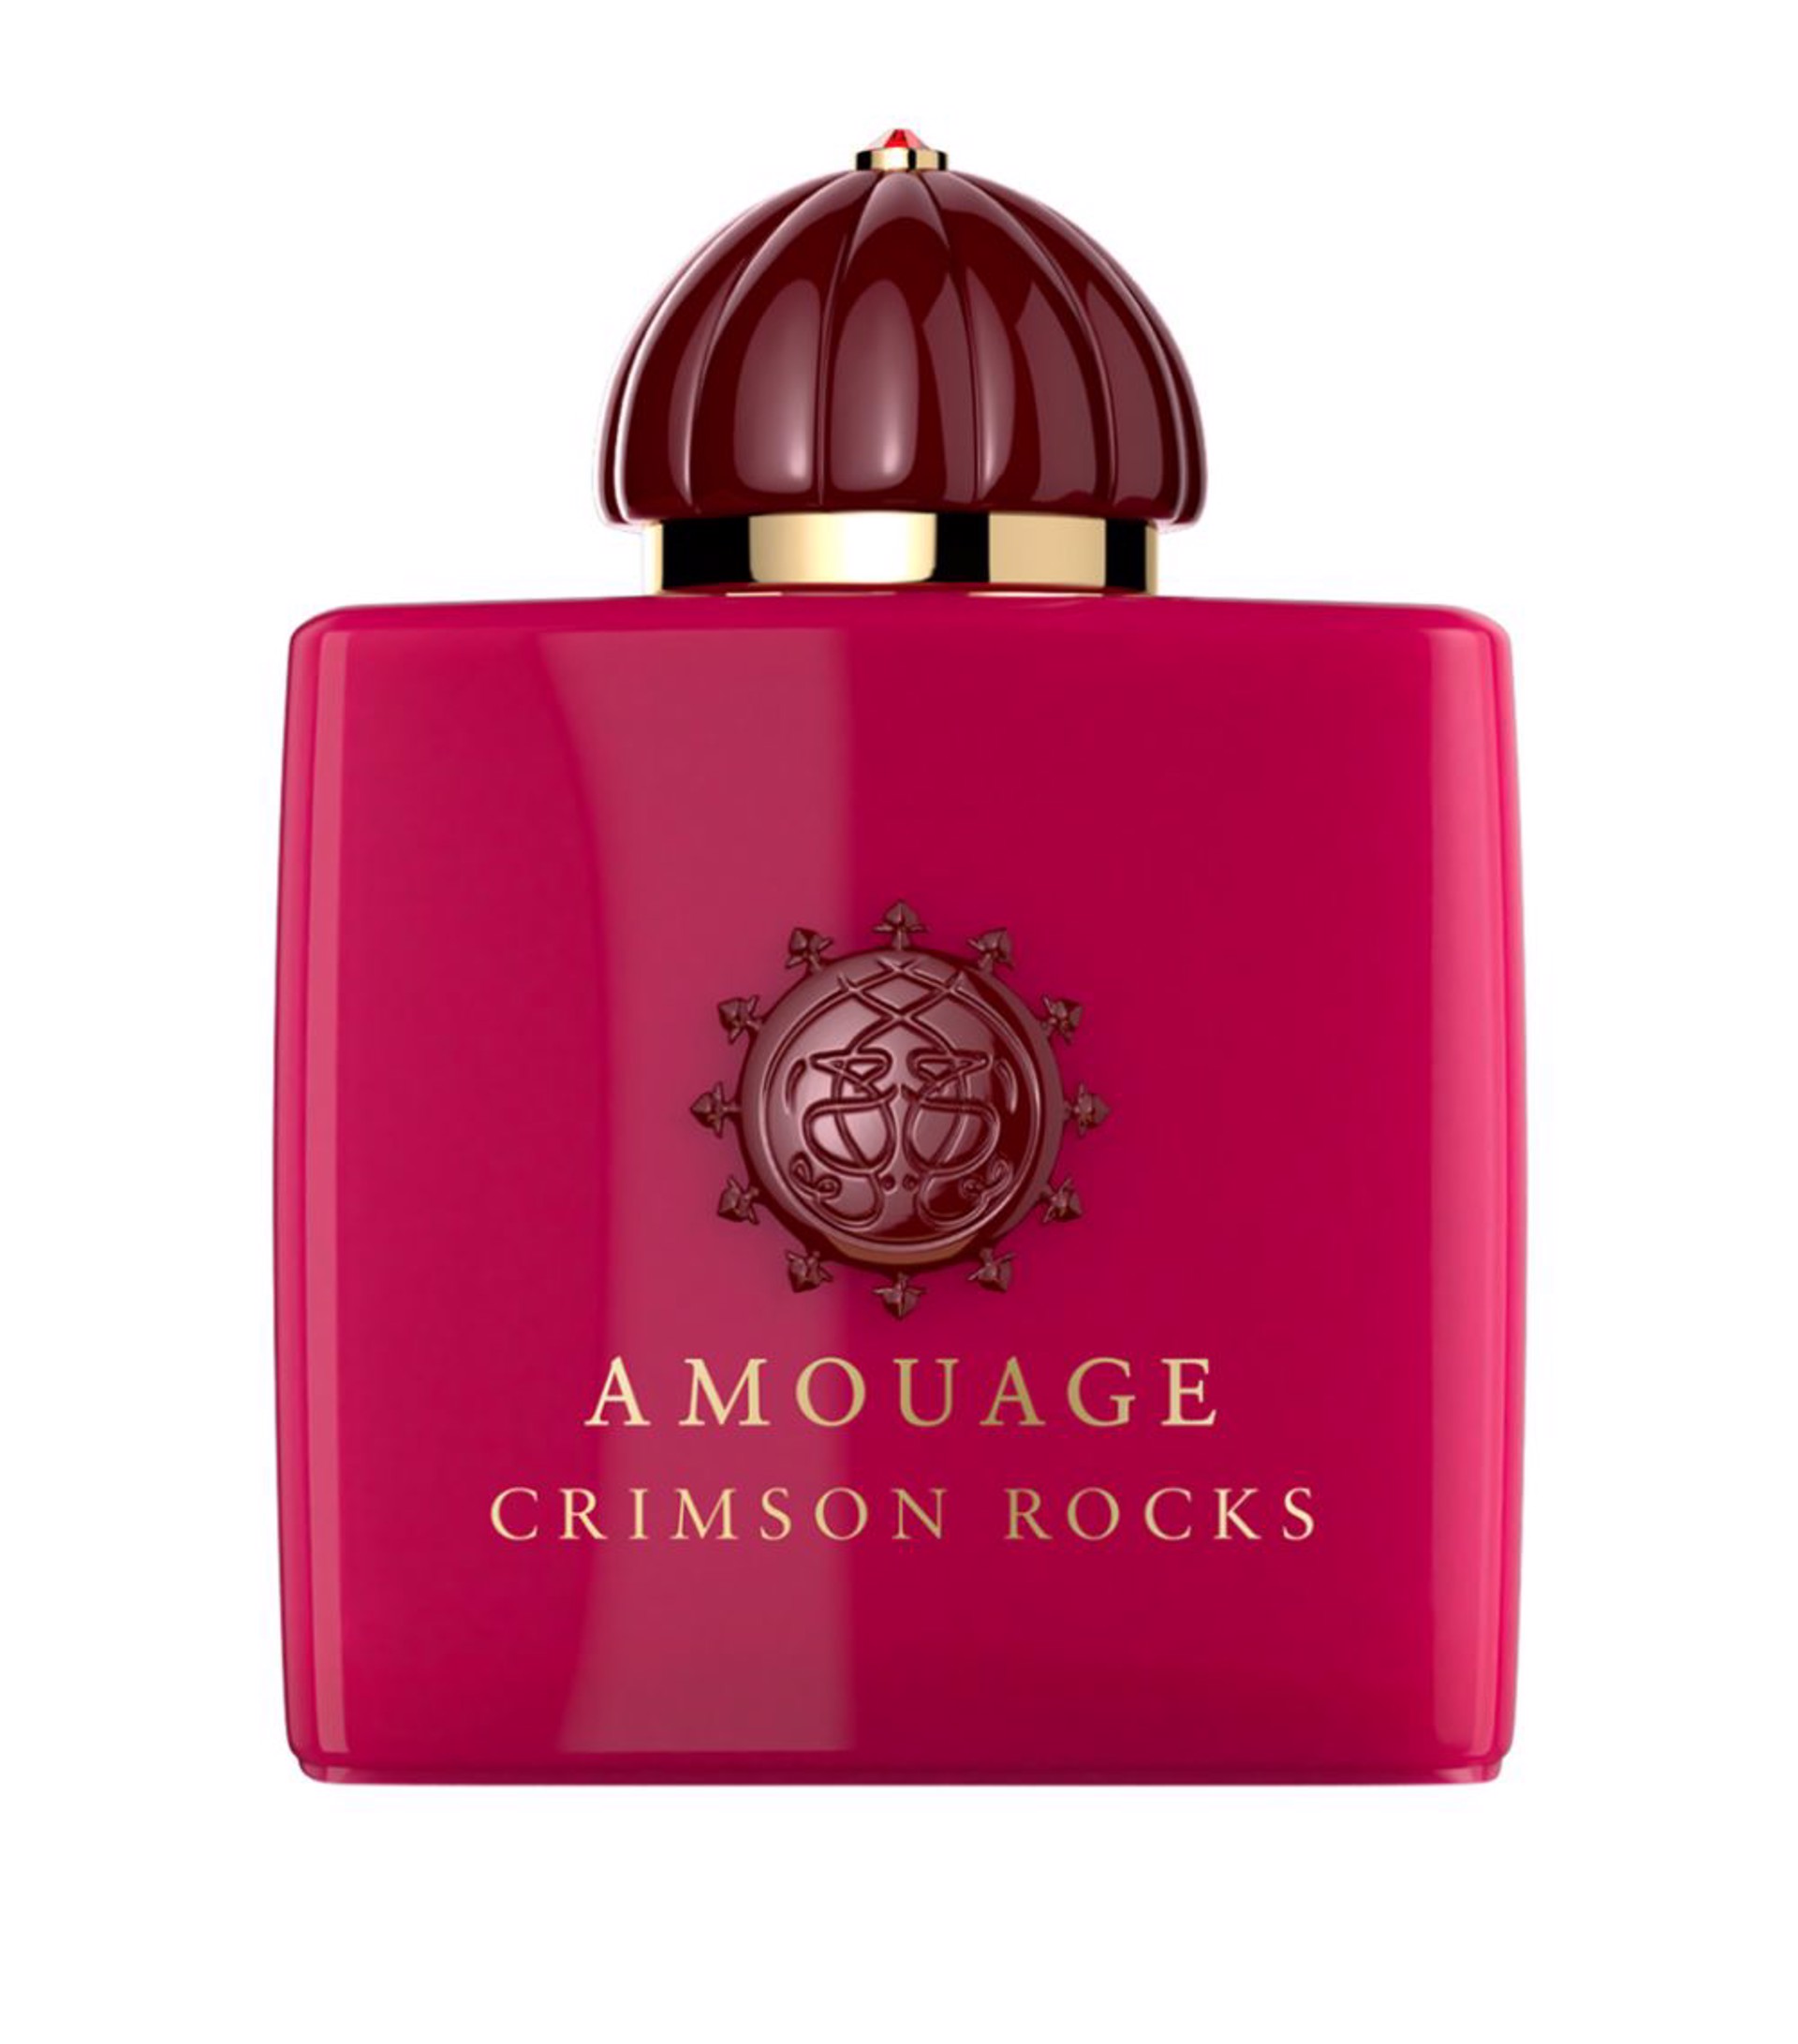 Amouage Crimson Rocks by J. Catma